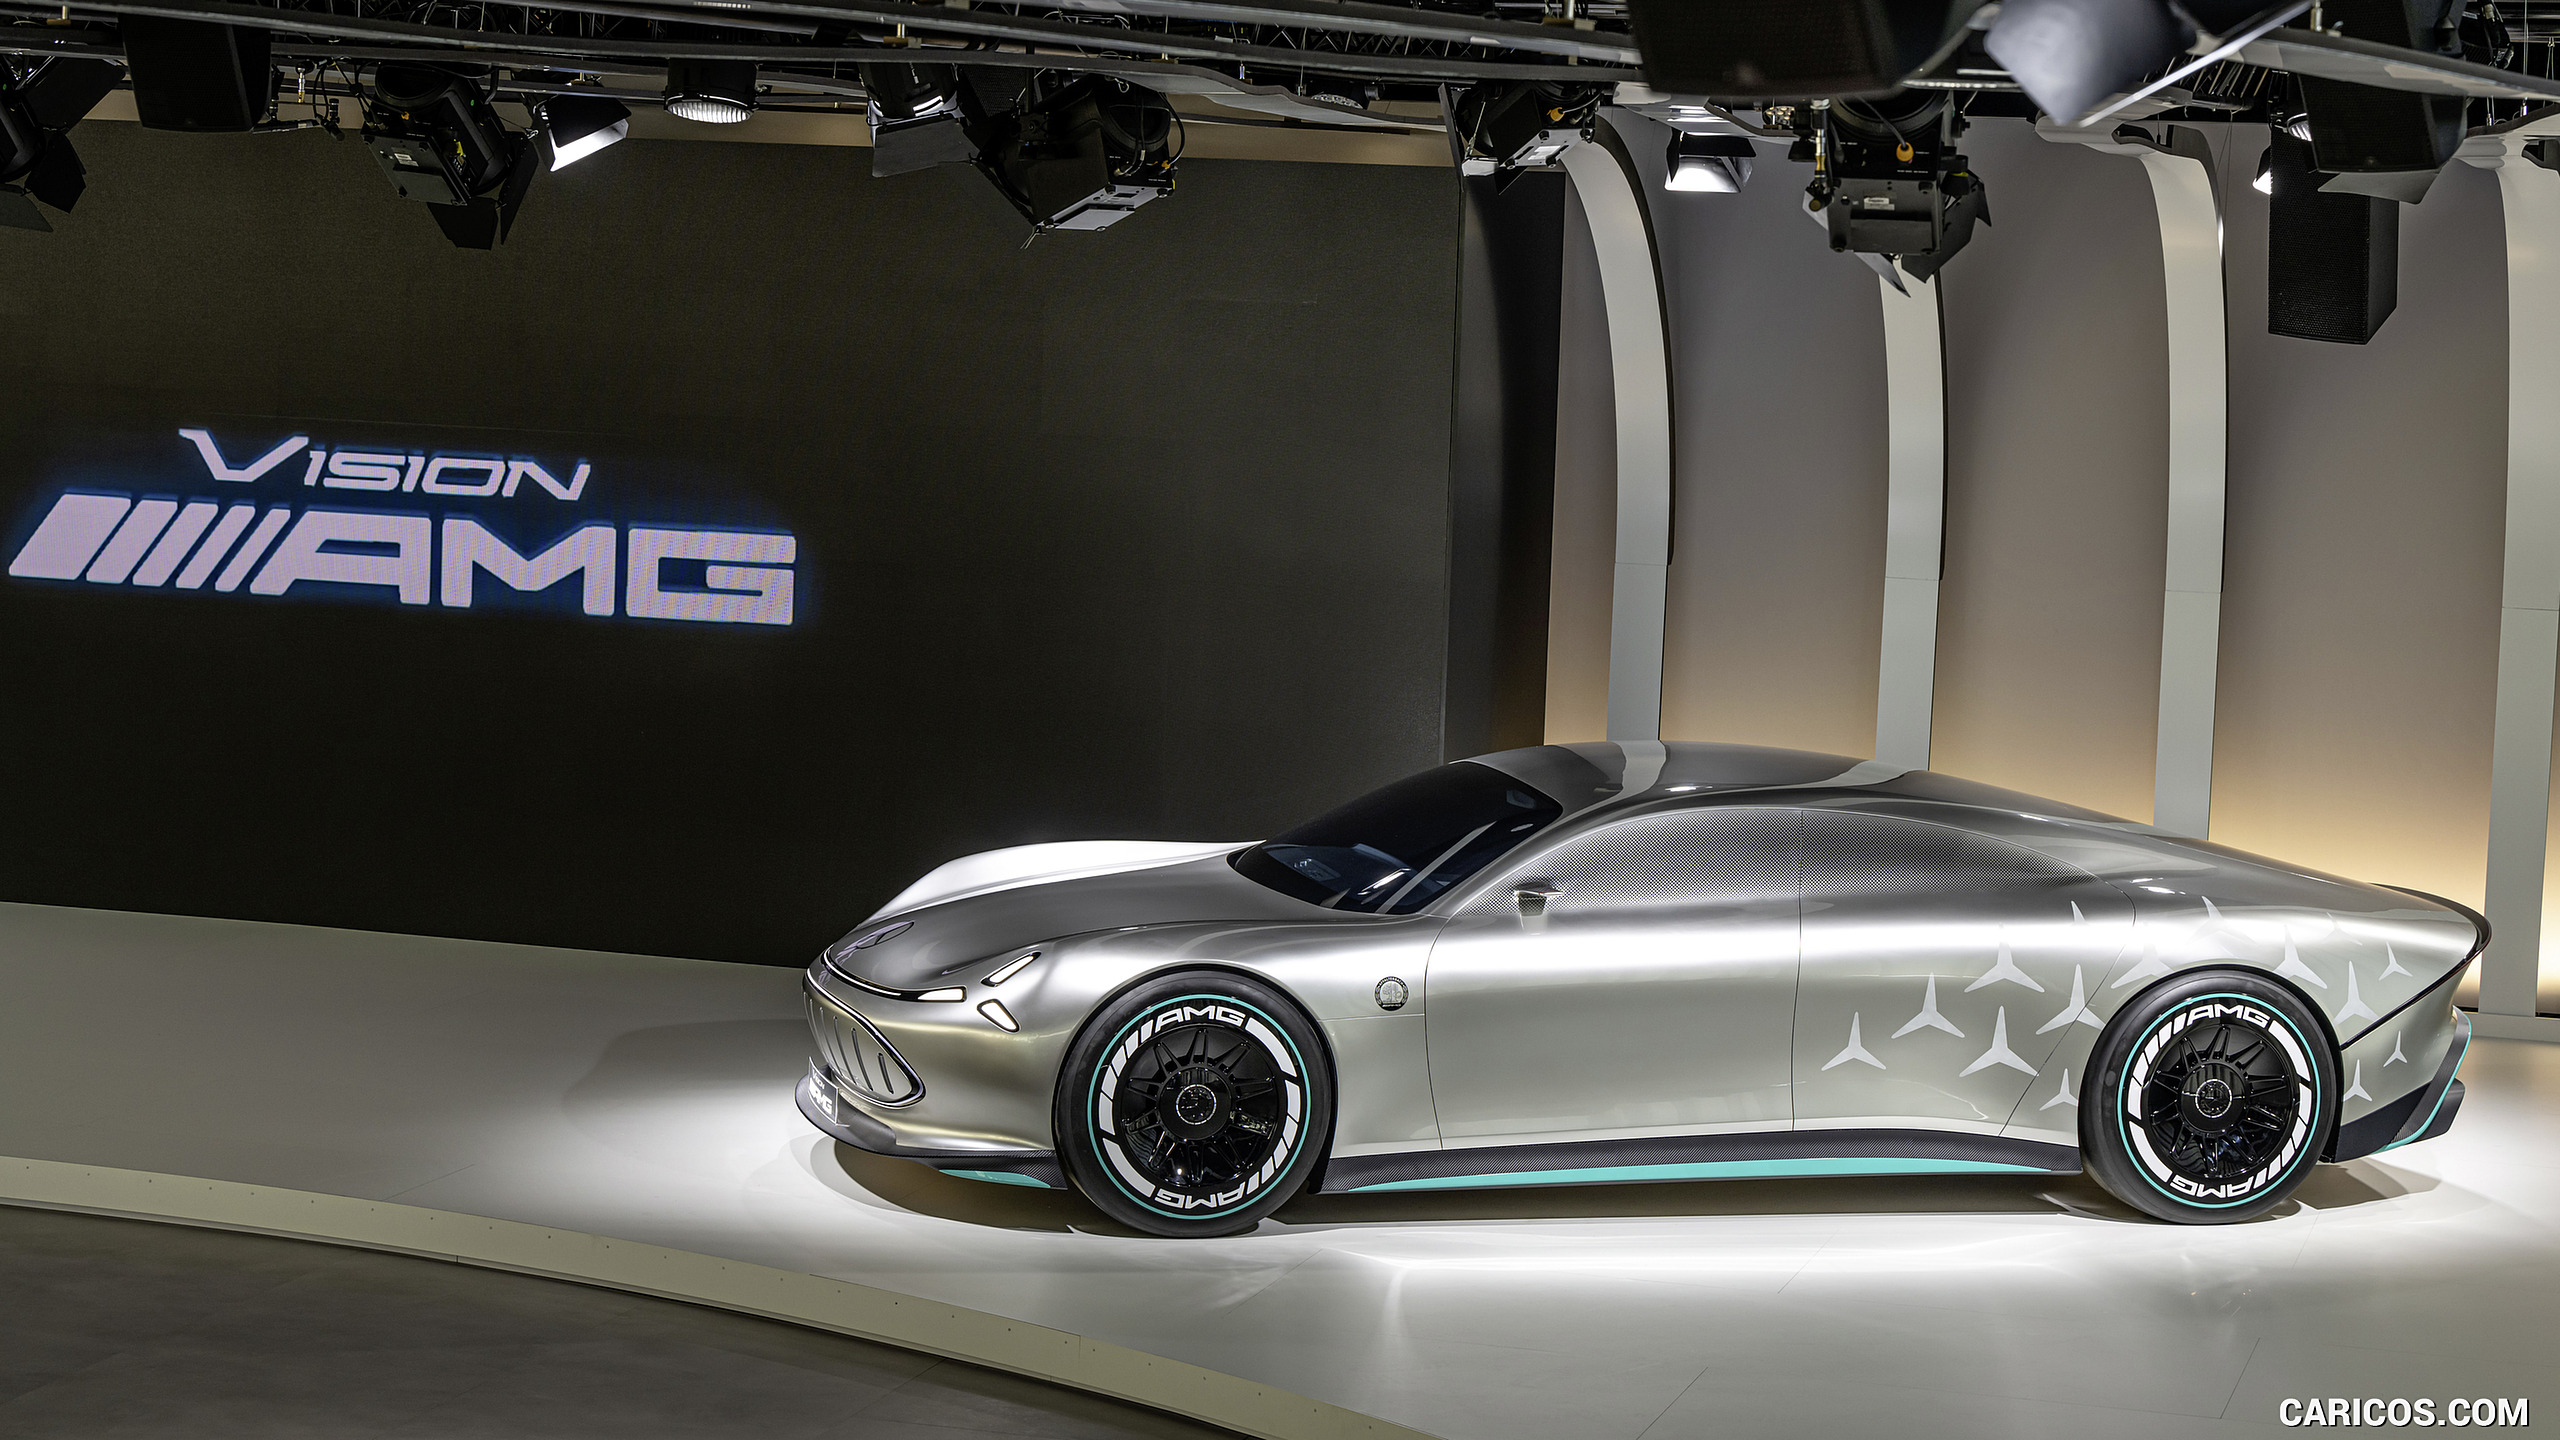 2022 Mercedes-Benz Vision AMG Concept - Side, #29 of 43